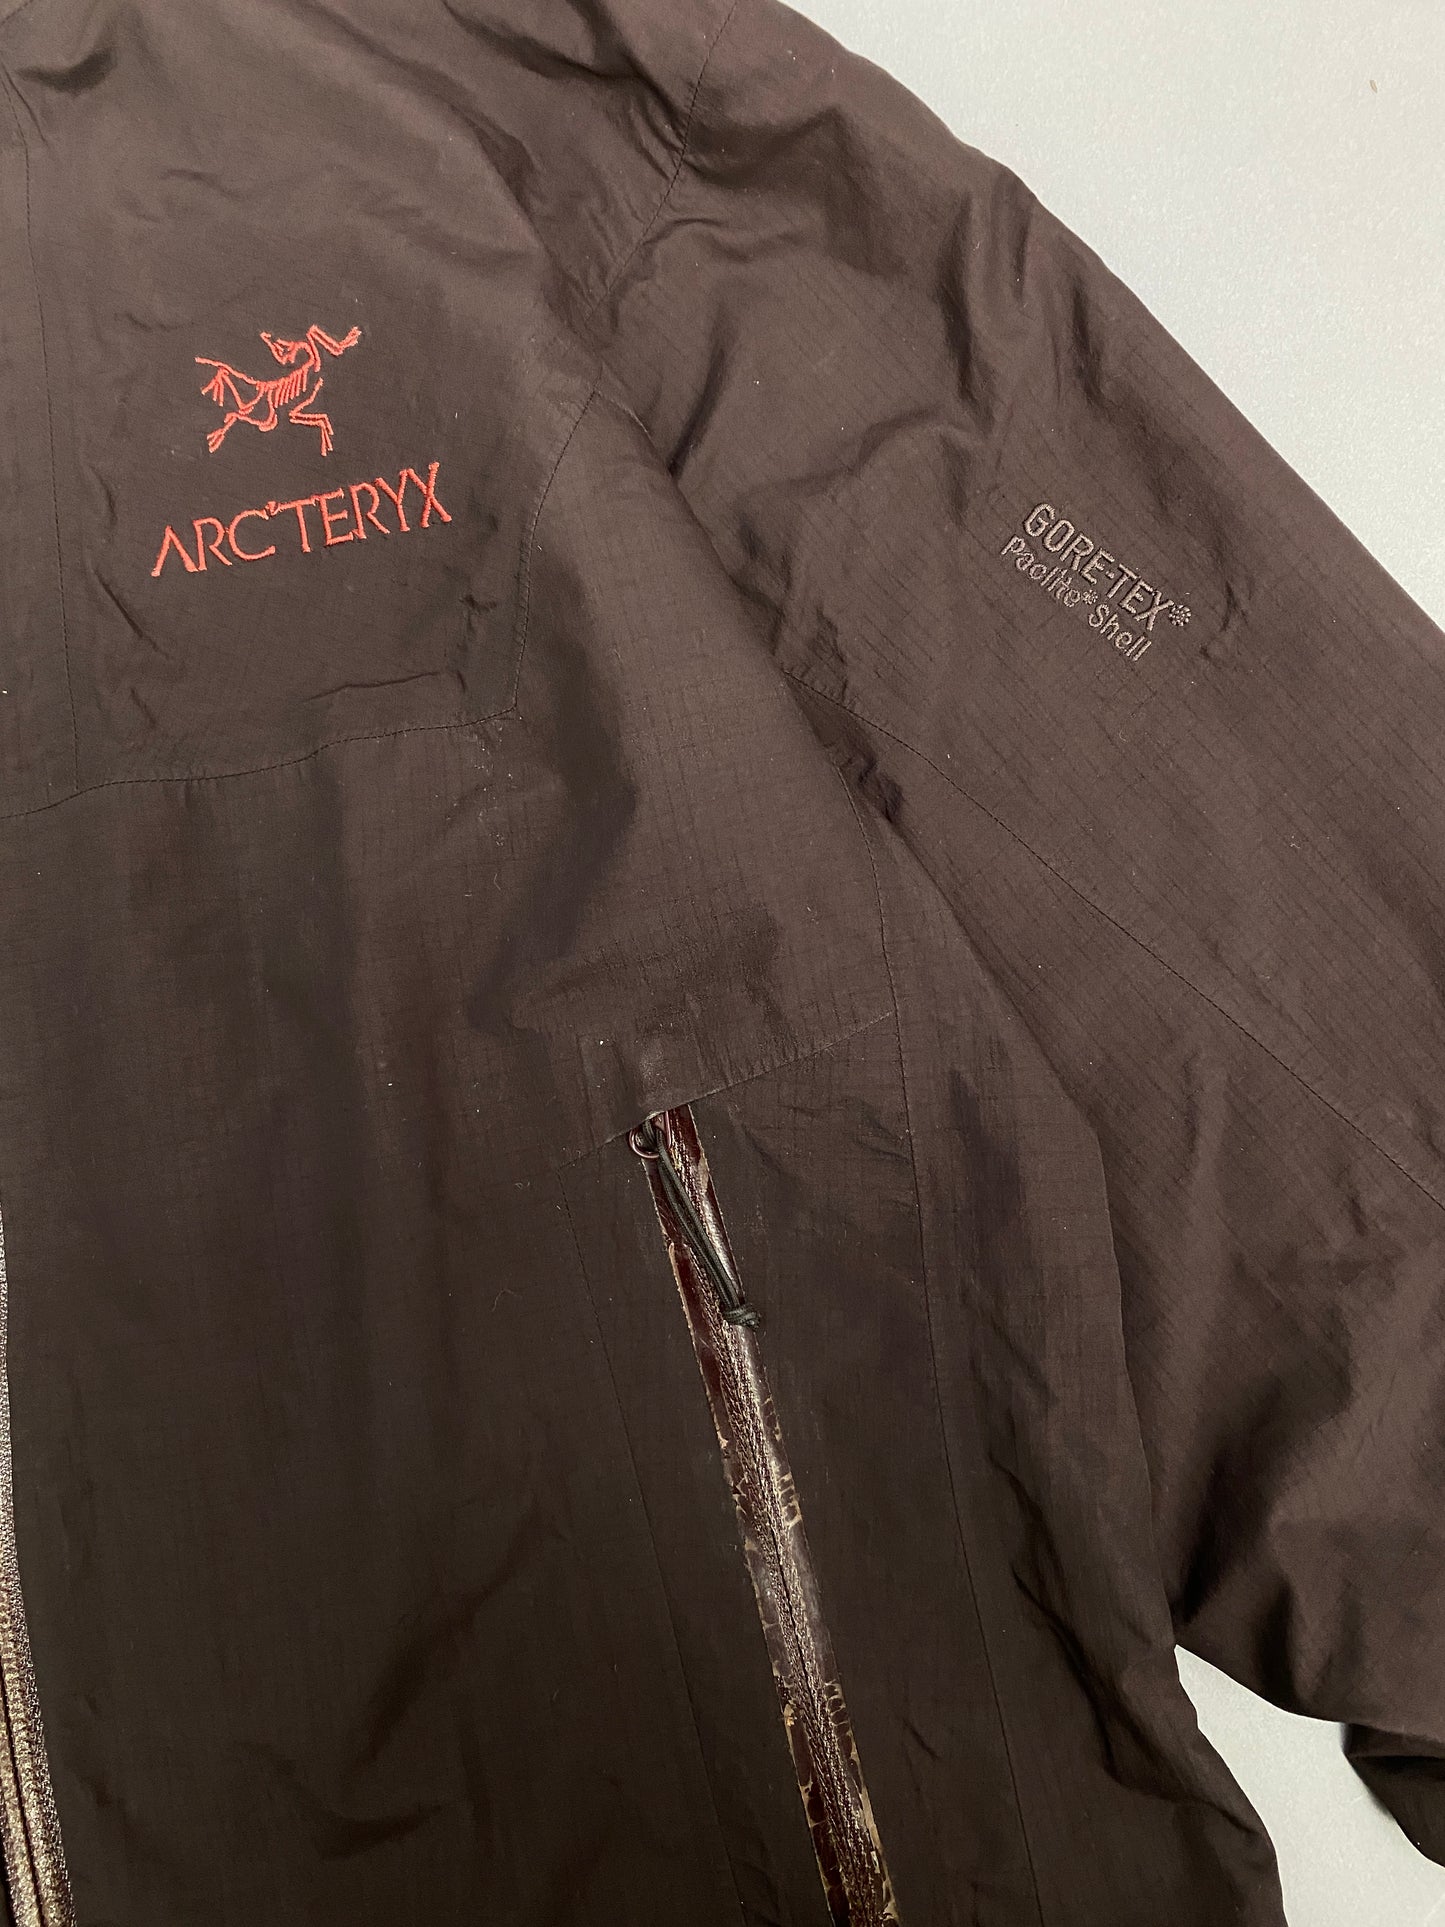 Arcteryx Paclite Shell Goretex Jacket - S